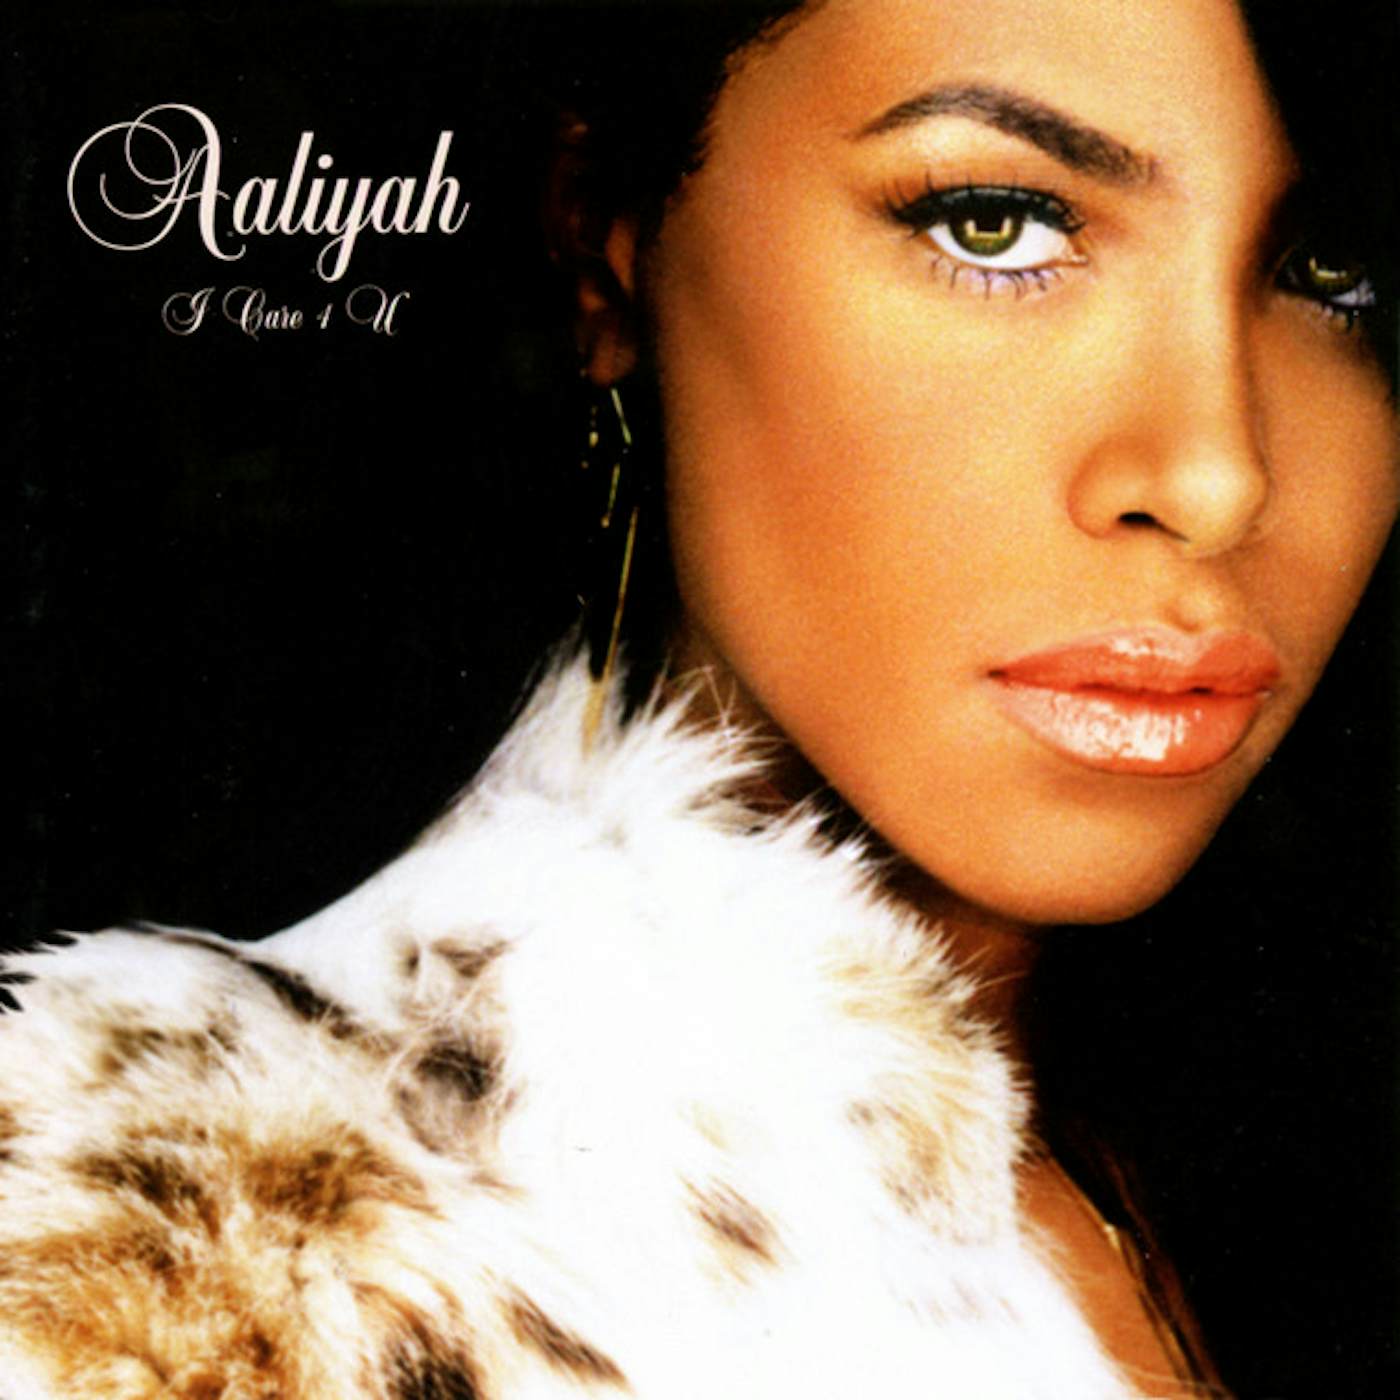 Aaliyah I Care 4 U Vinyl Record